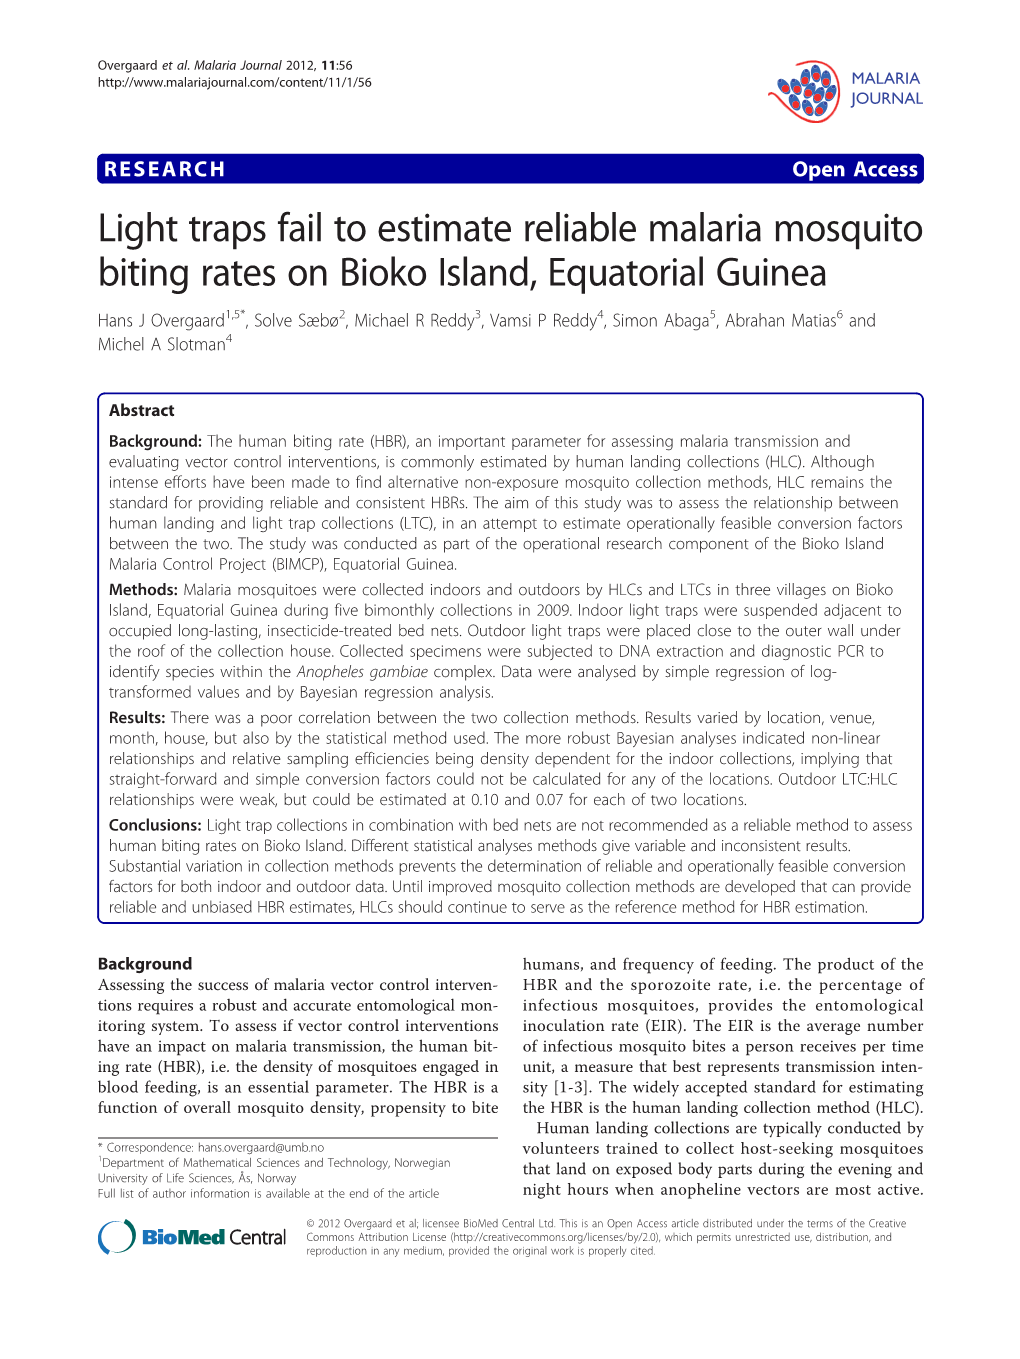 Light Traps Fail to Estimate Reliable Malaria Mosquito Biting Rates On